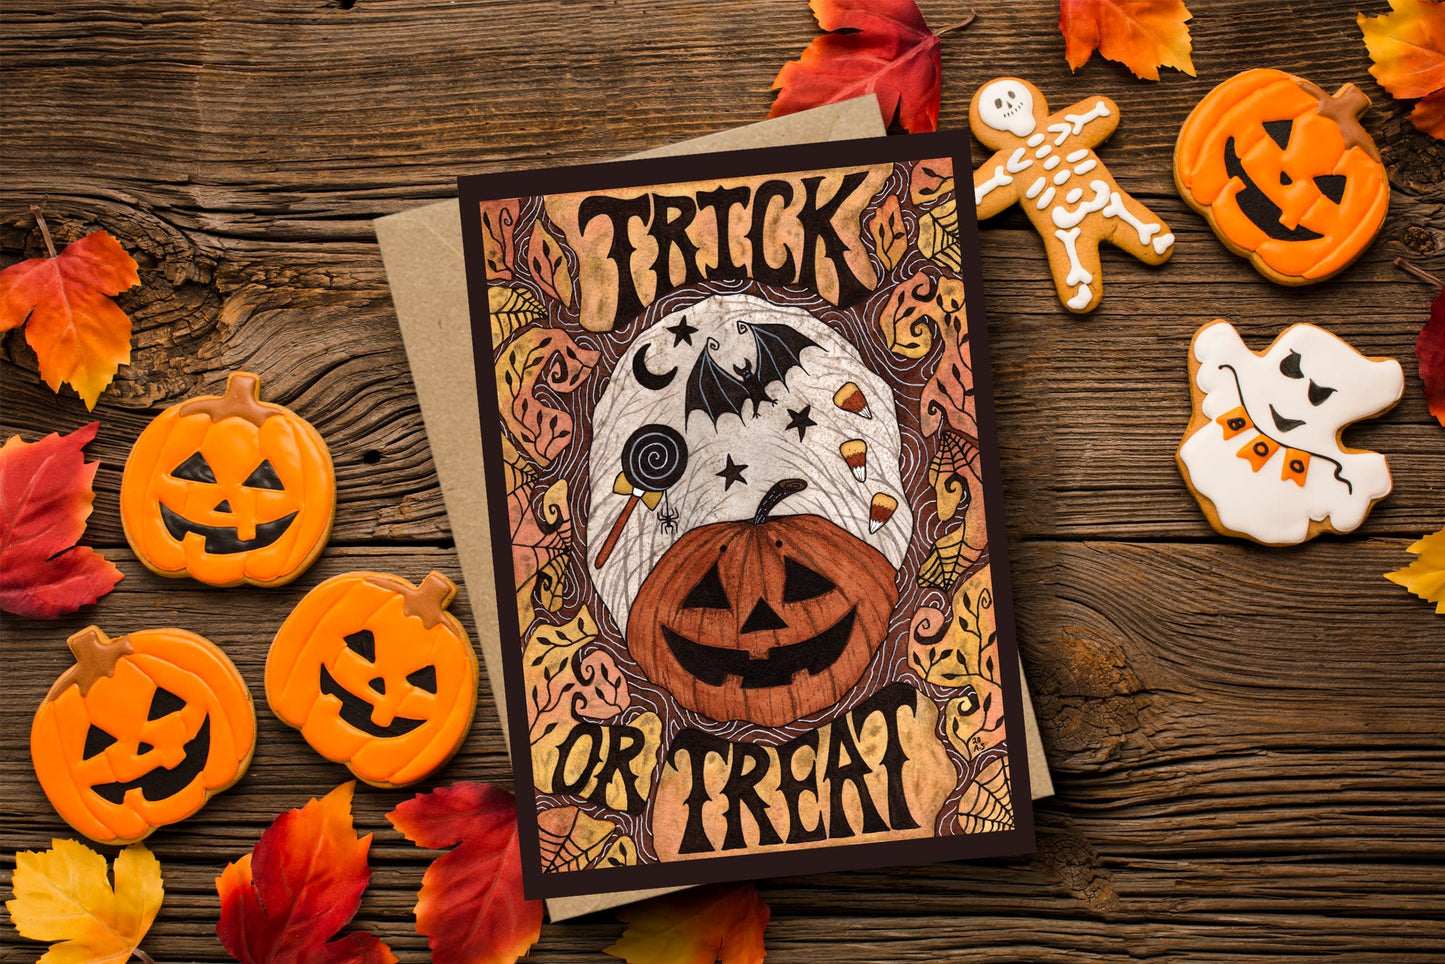 Trick Or Treat Greetings Card & Envelope - Orange Halloween Pumpkin Illustrated Card - Gothic Alternative Samhain Card - Candy Corn Bats